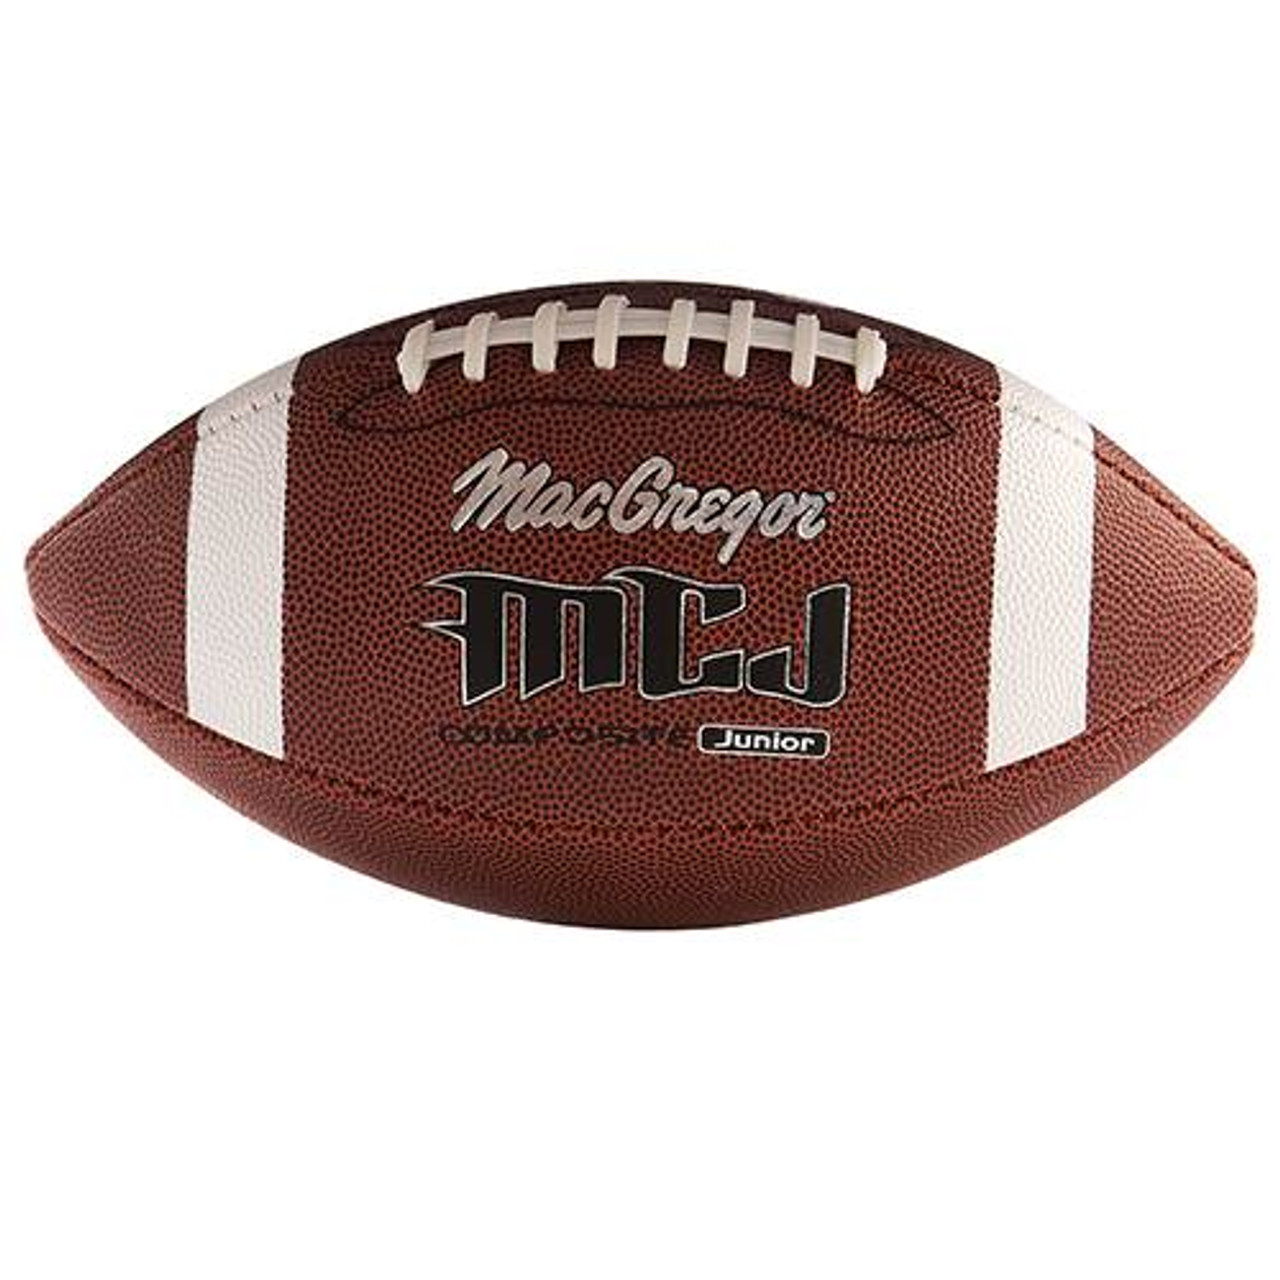 MacGregor MC Composite Football - Junior, 9-12